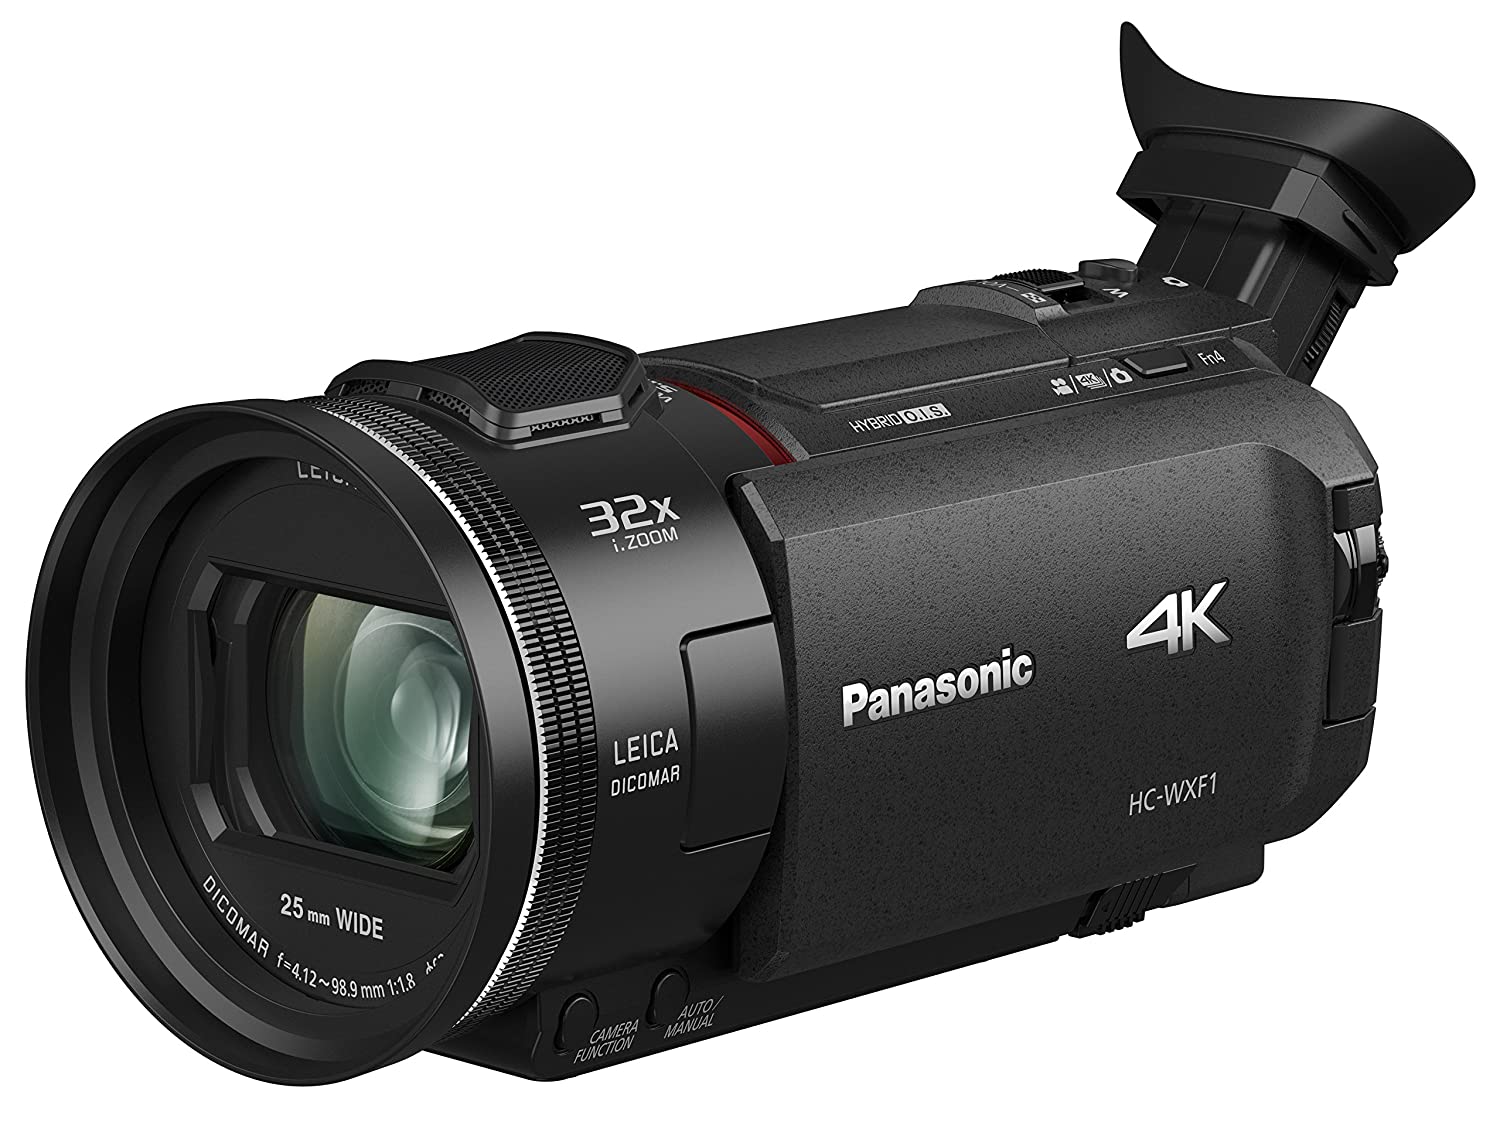 Panasonic HC-WXF1 4K Cinema-Like Camcorder, 24x Leica Dicomar Lens, 1/2.5" Bsi Sensor, Three O.I.S. Stabilizer Systems